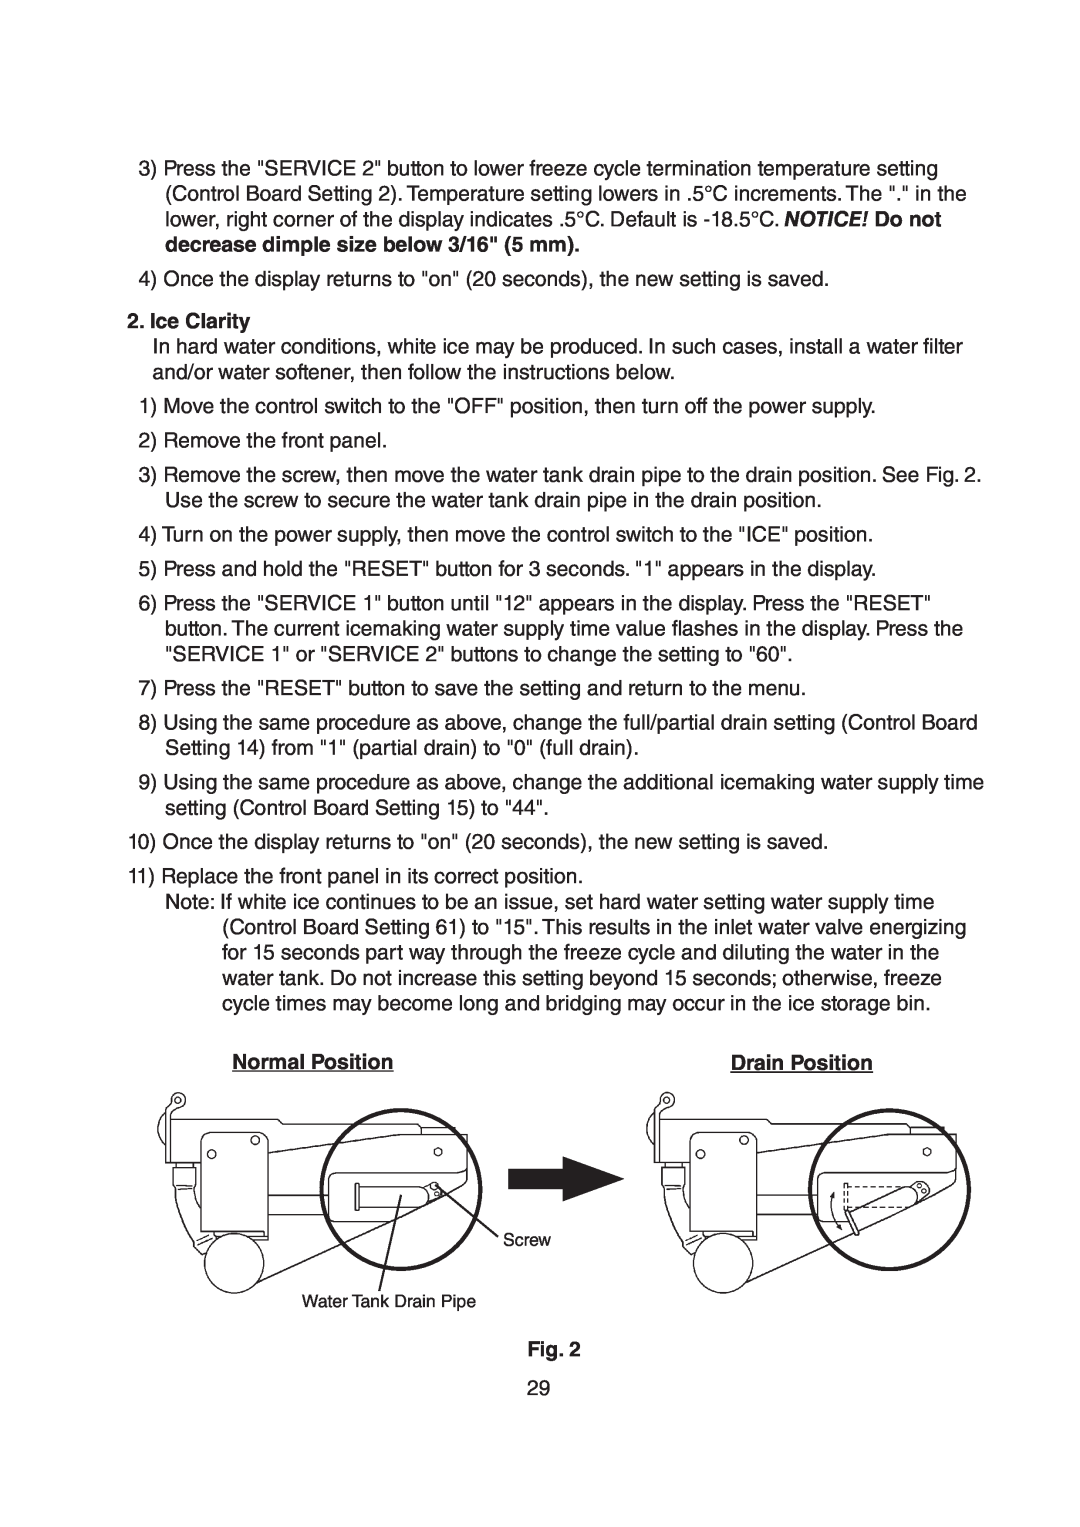 Hoshizaki M029-897 service manual Ice Clarity, Normal Position, Drain Position 